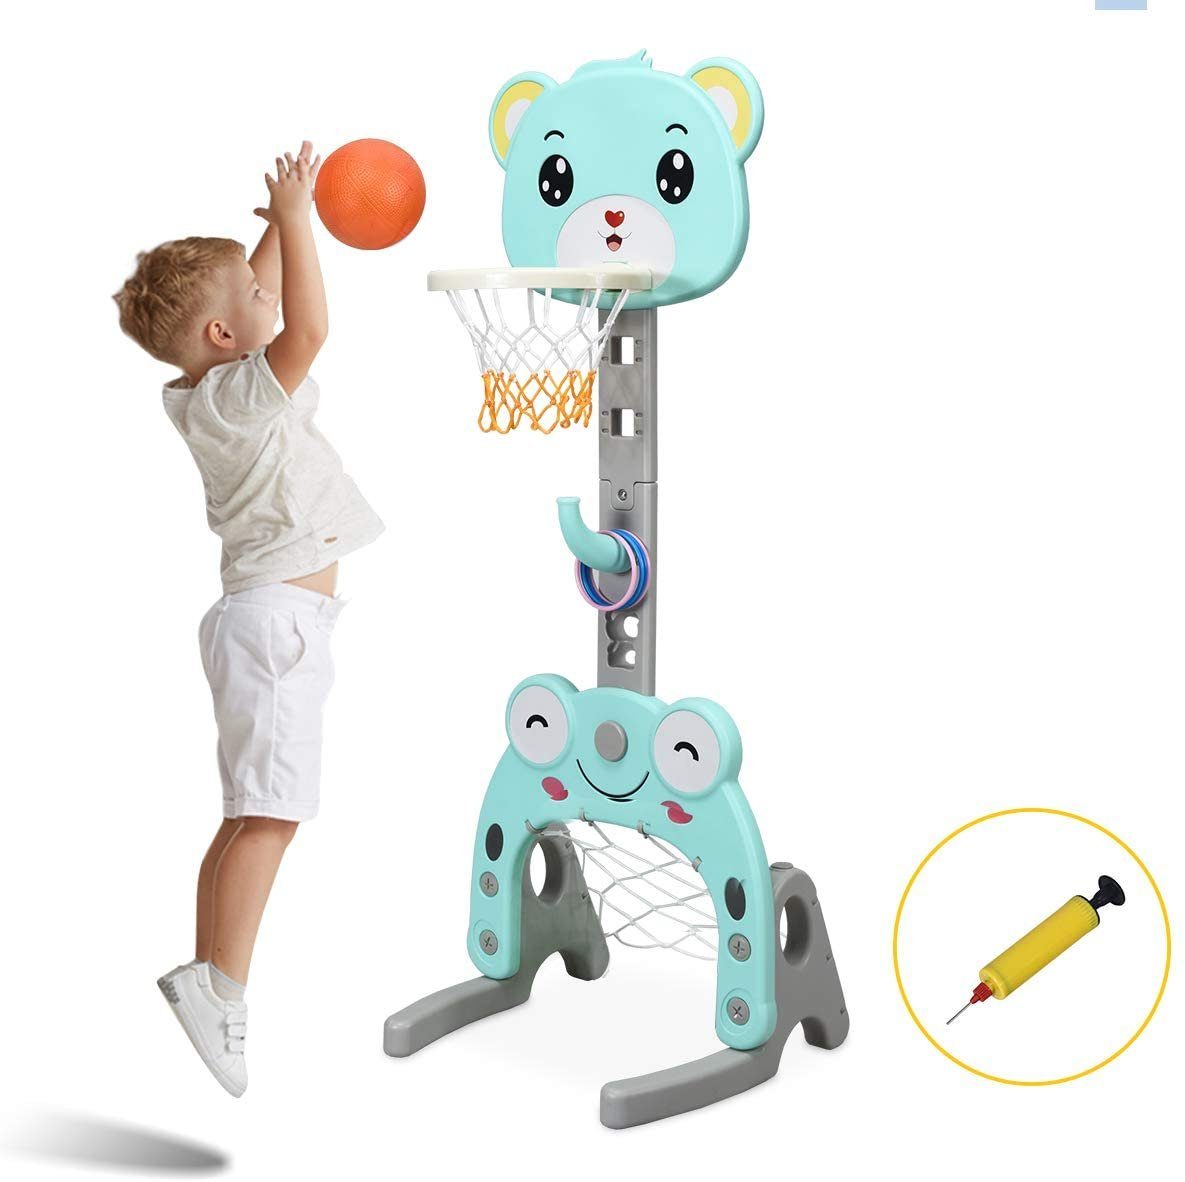 2x Mini Basketball Gummiball Kinder Spielzeug Junge Geschenk Ø 13cm 